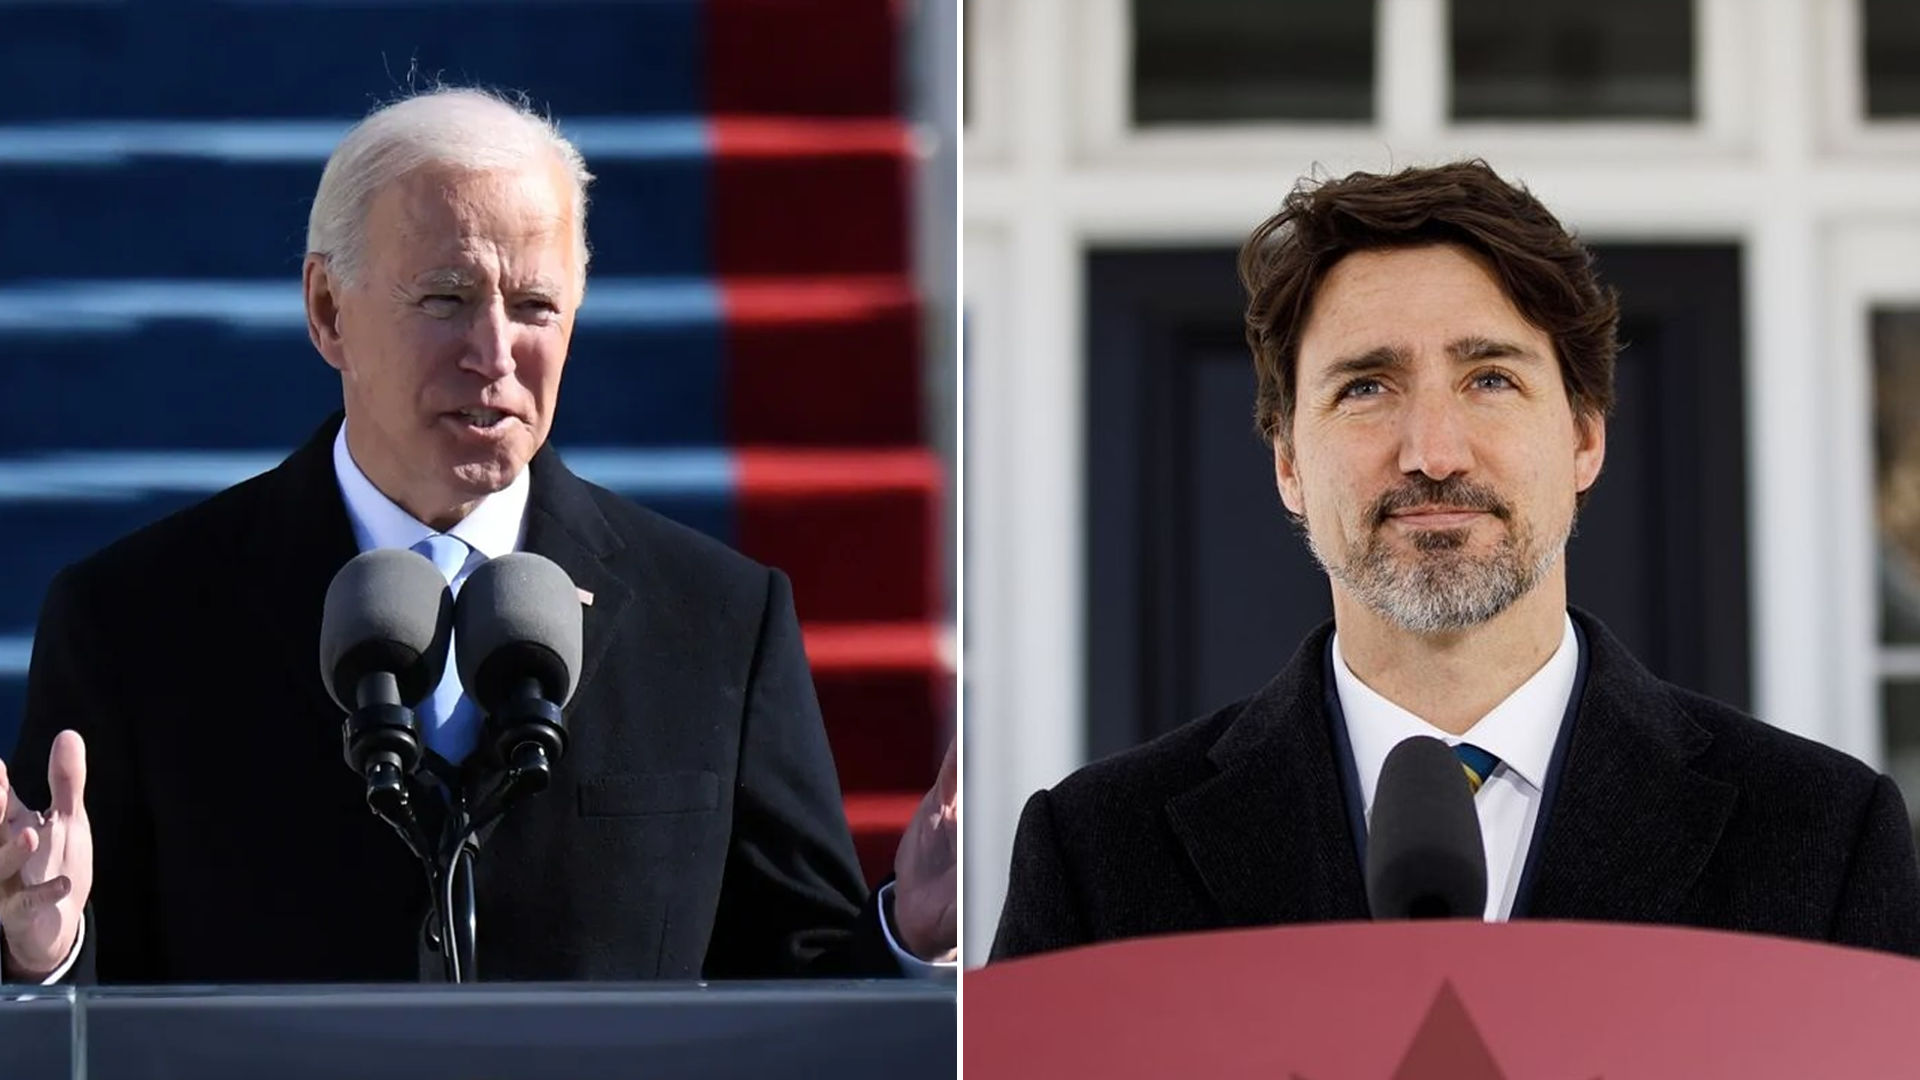 Biden declares Canada ‘best friend’, Trudeau says US leadership has been sorely missed